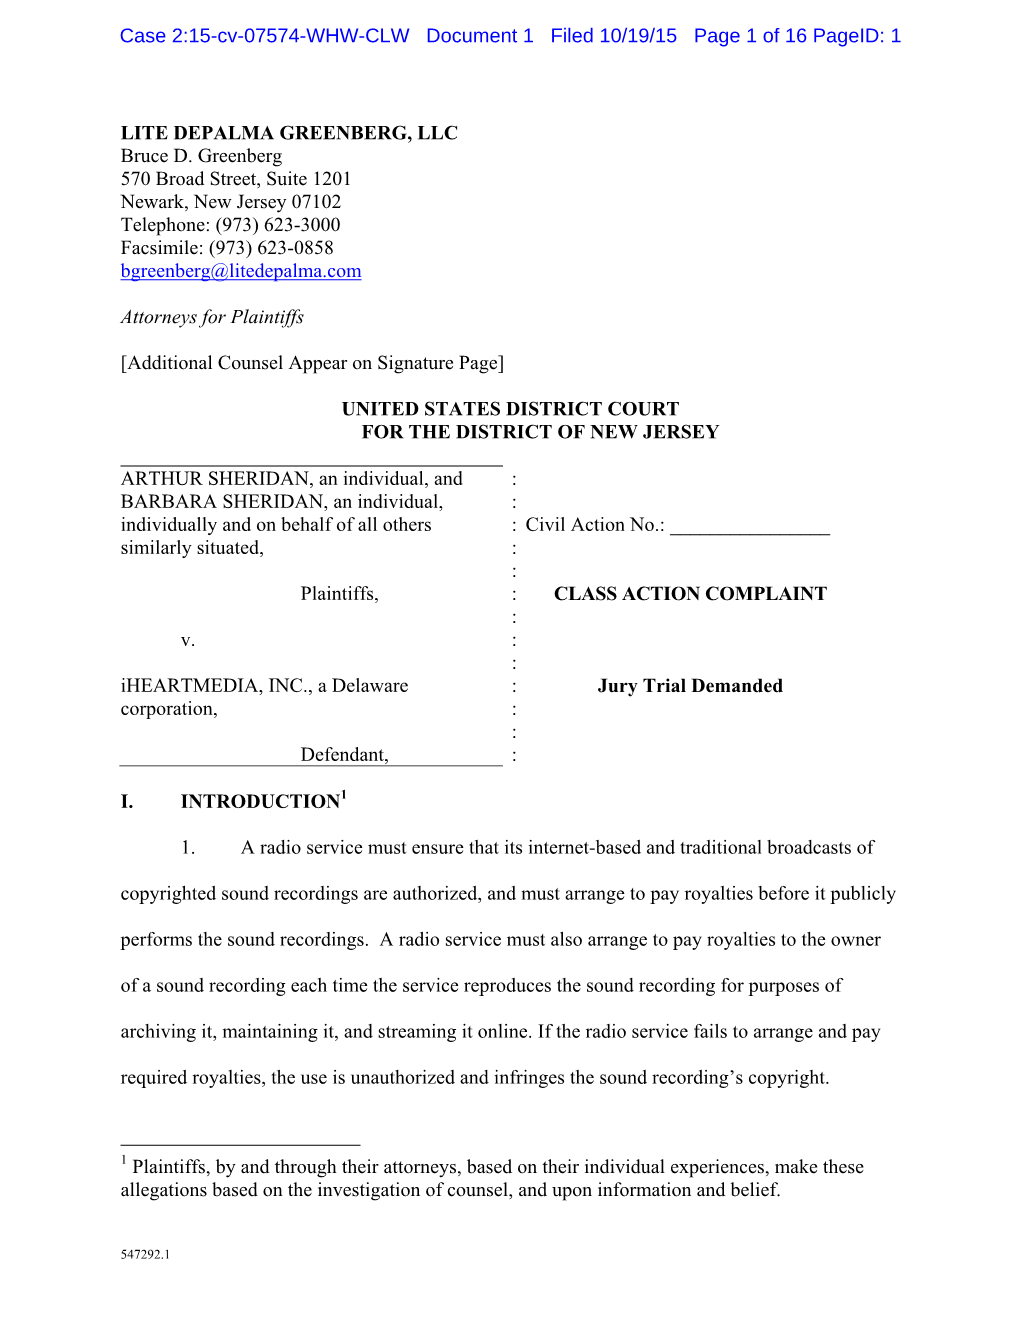 Iheartmedia, INC., a Delaware : Jury Trial Demanded Corporation, : : Defendant,